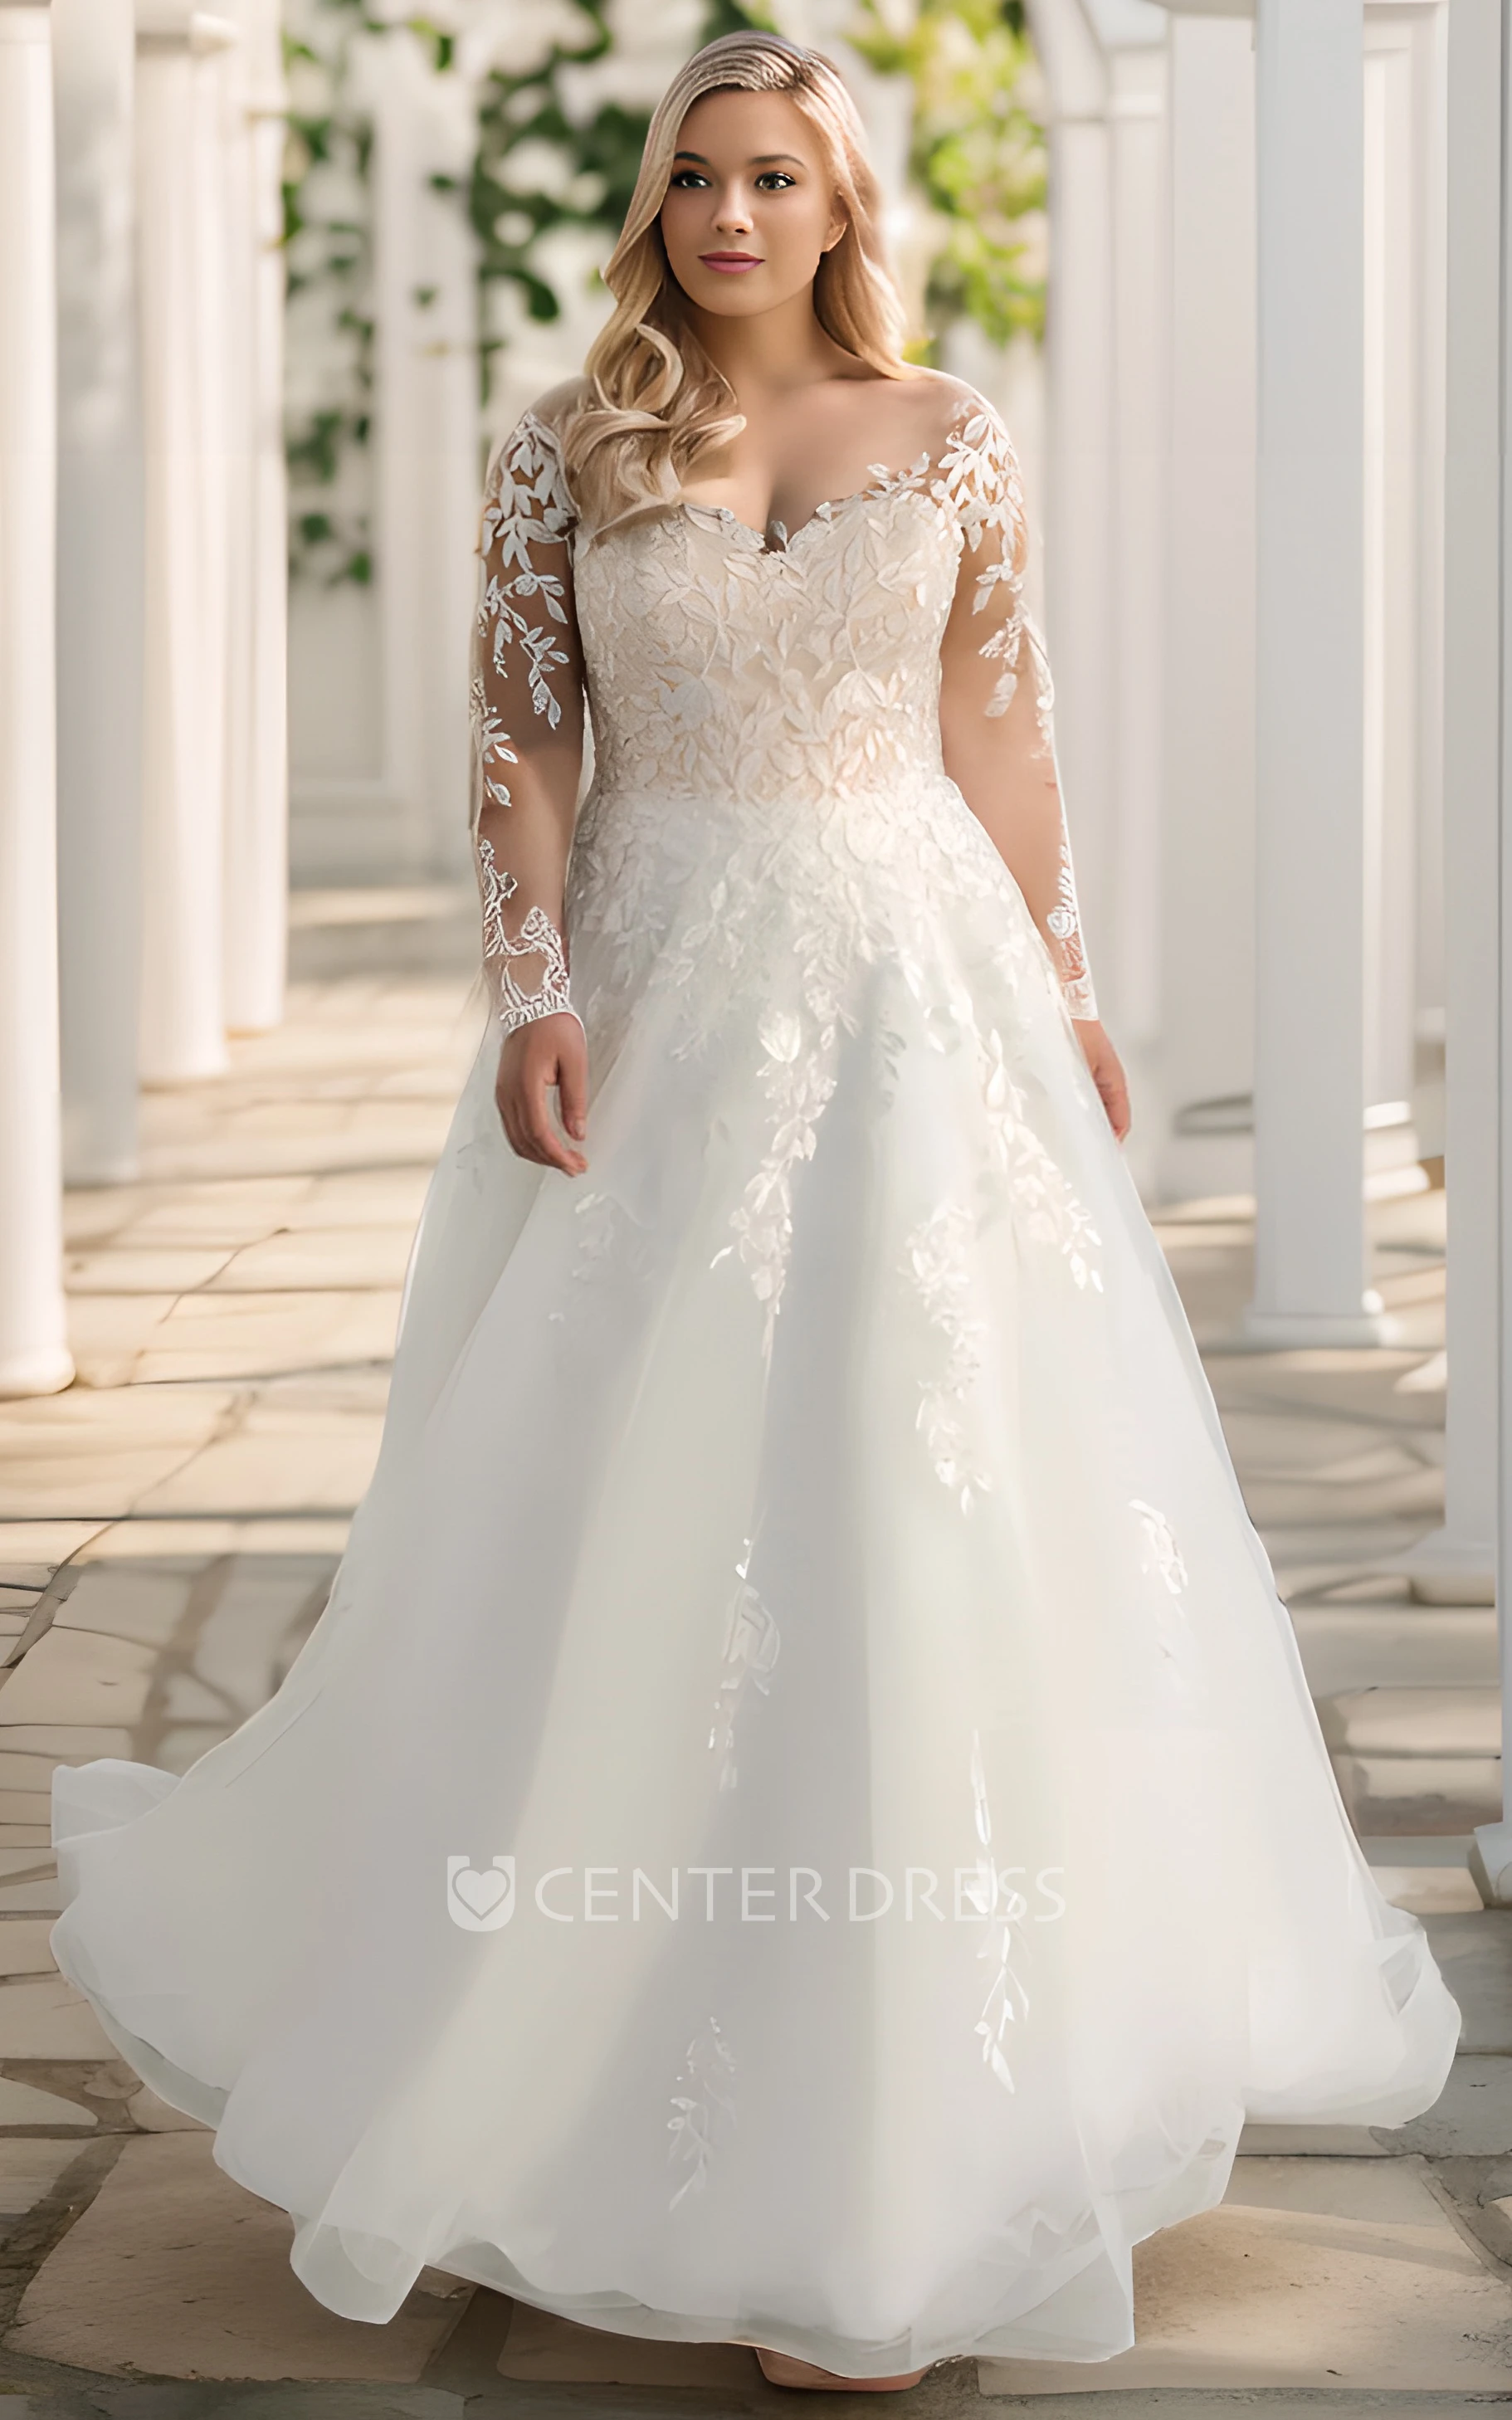 V-Neck Illusion Long Sleeve A-Line Satin Appliqued Plus Size Wedding Dress  - UCenter Dress